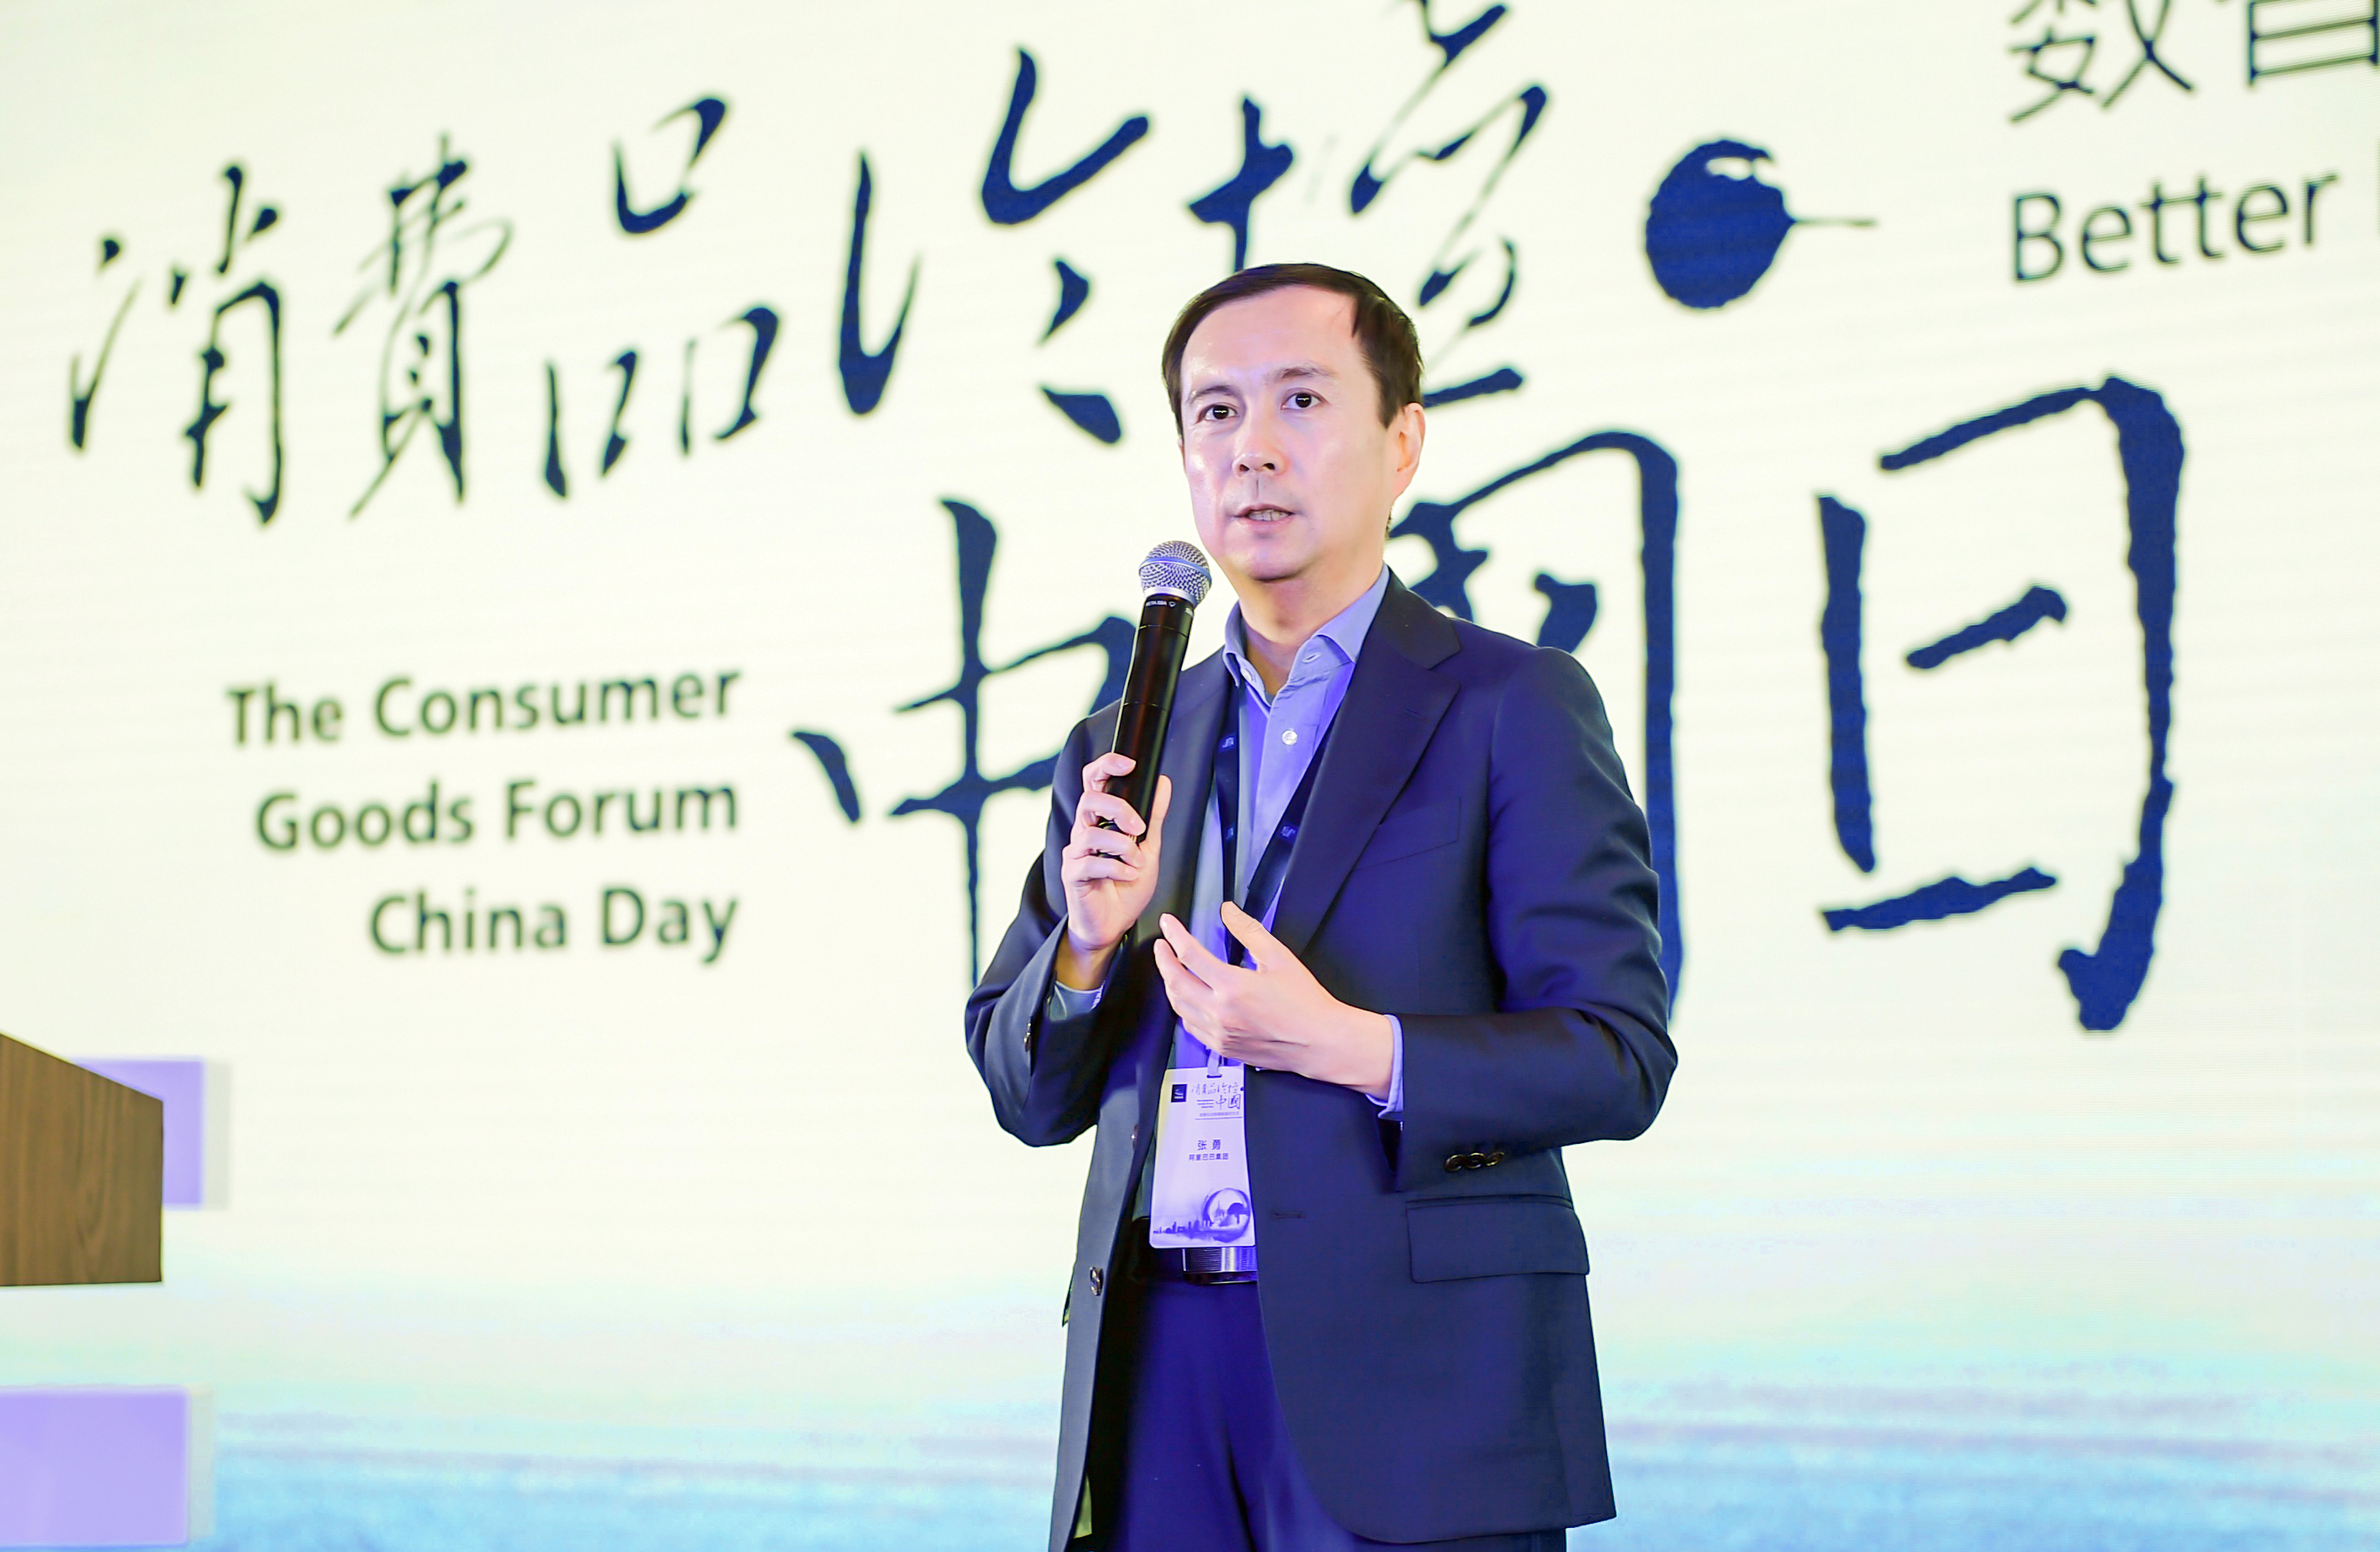 Daniel at Consumer Goods Forum China Day